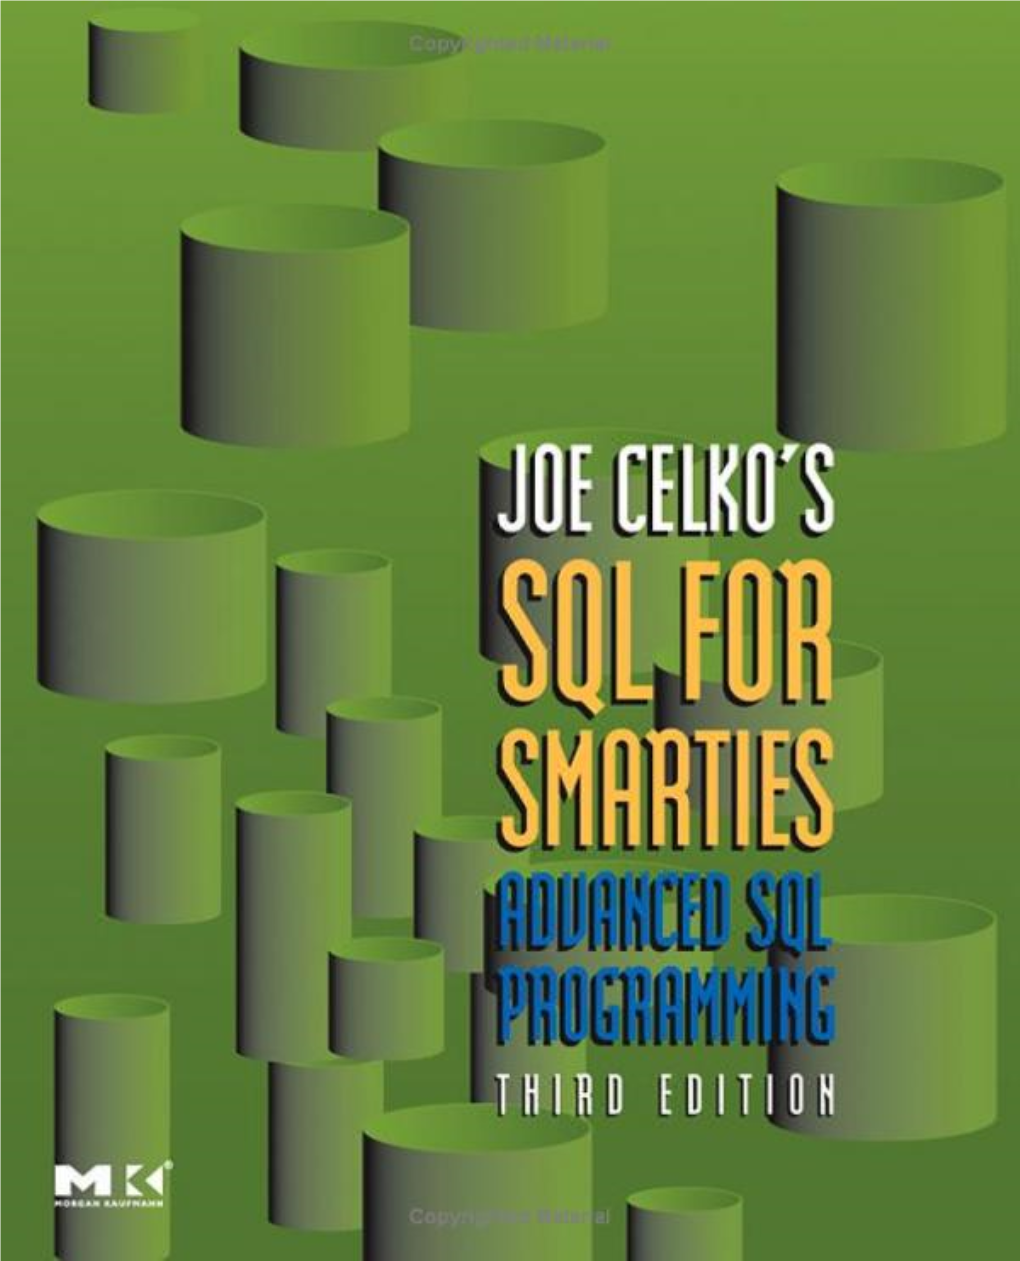 Advanced Sql Programming Third Edition